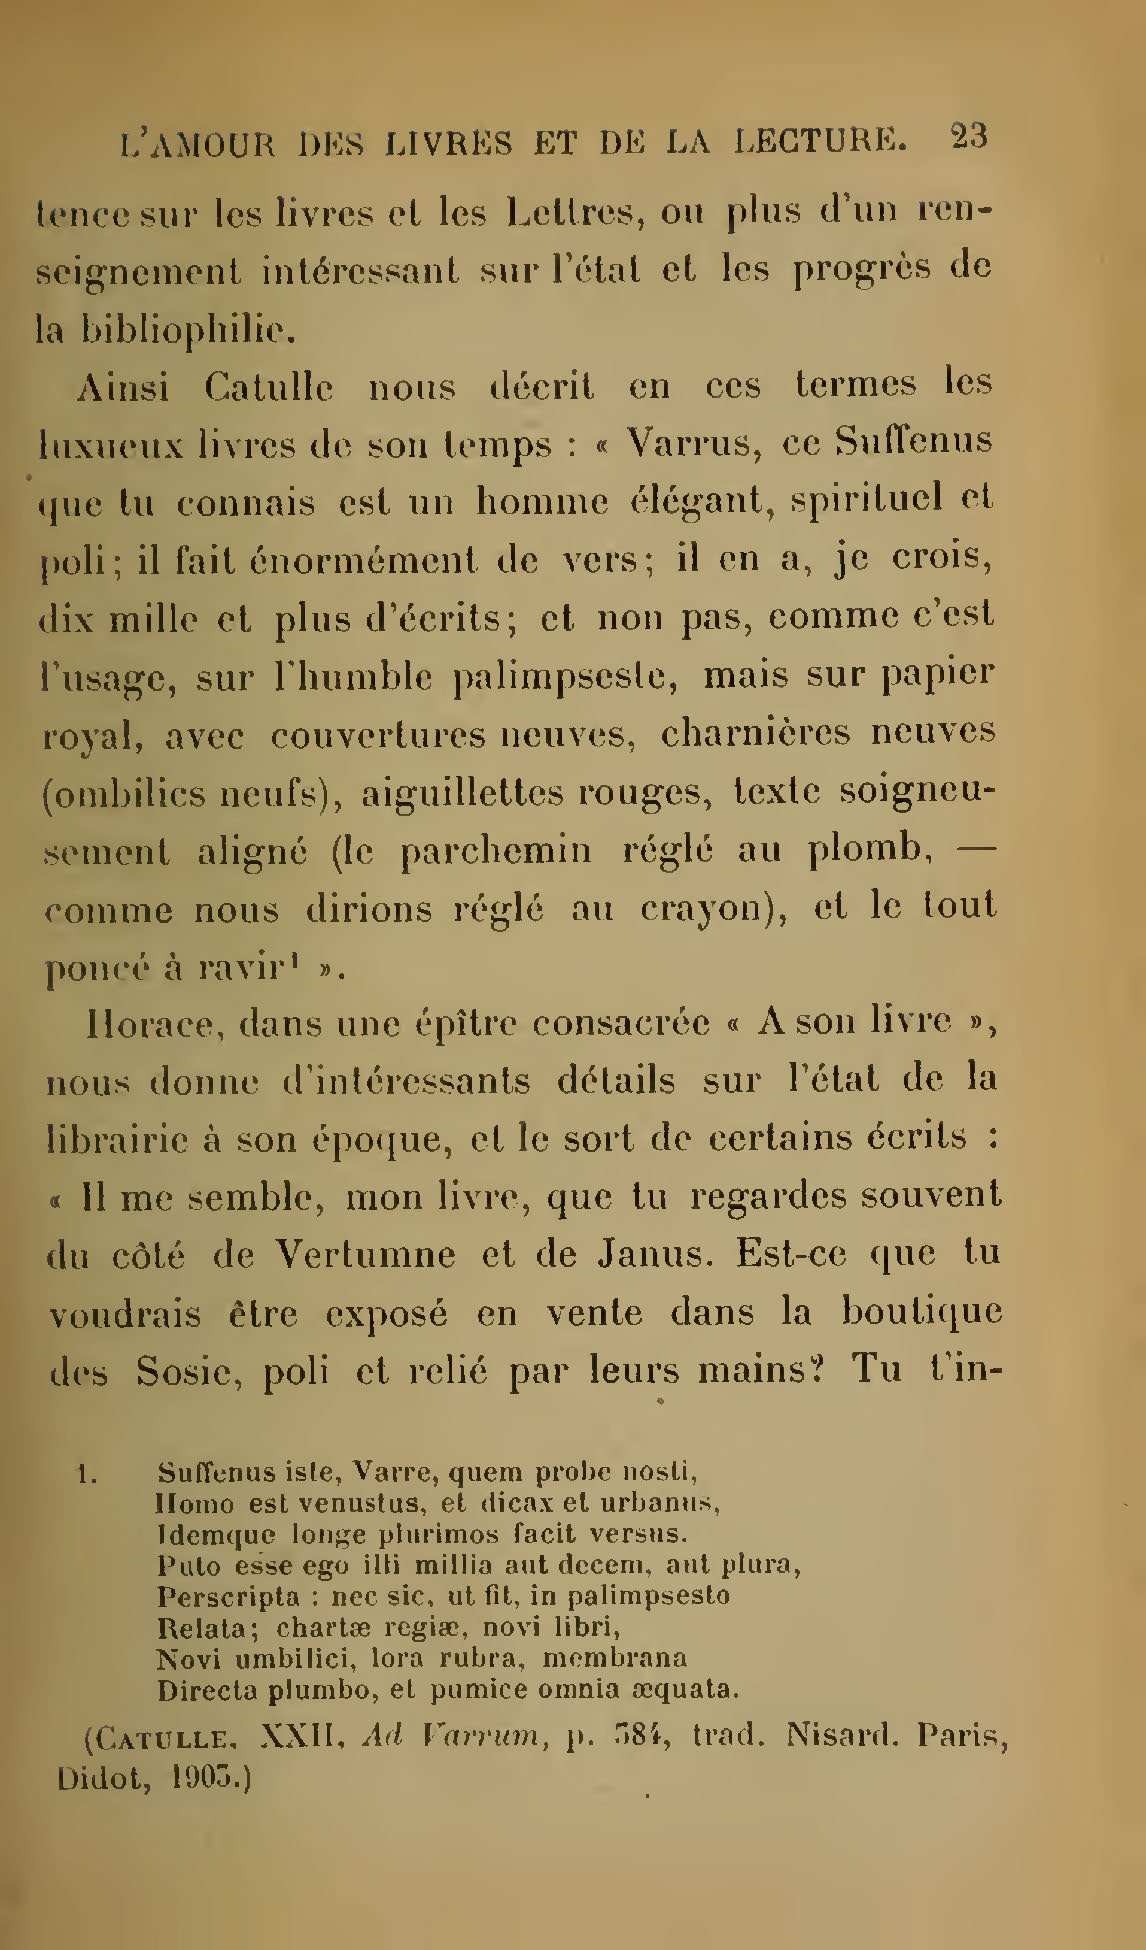 Albert Cim, Le Livre, t. I, p. 23.